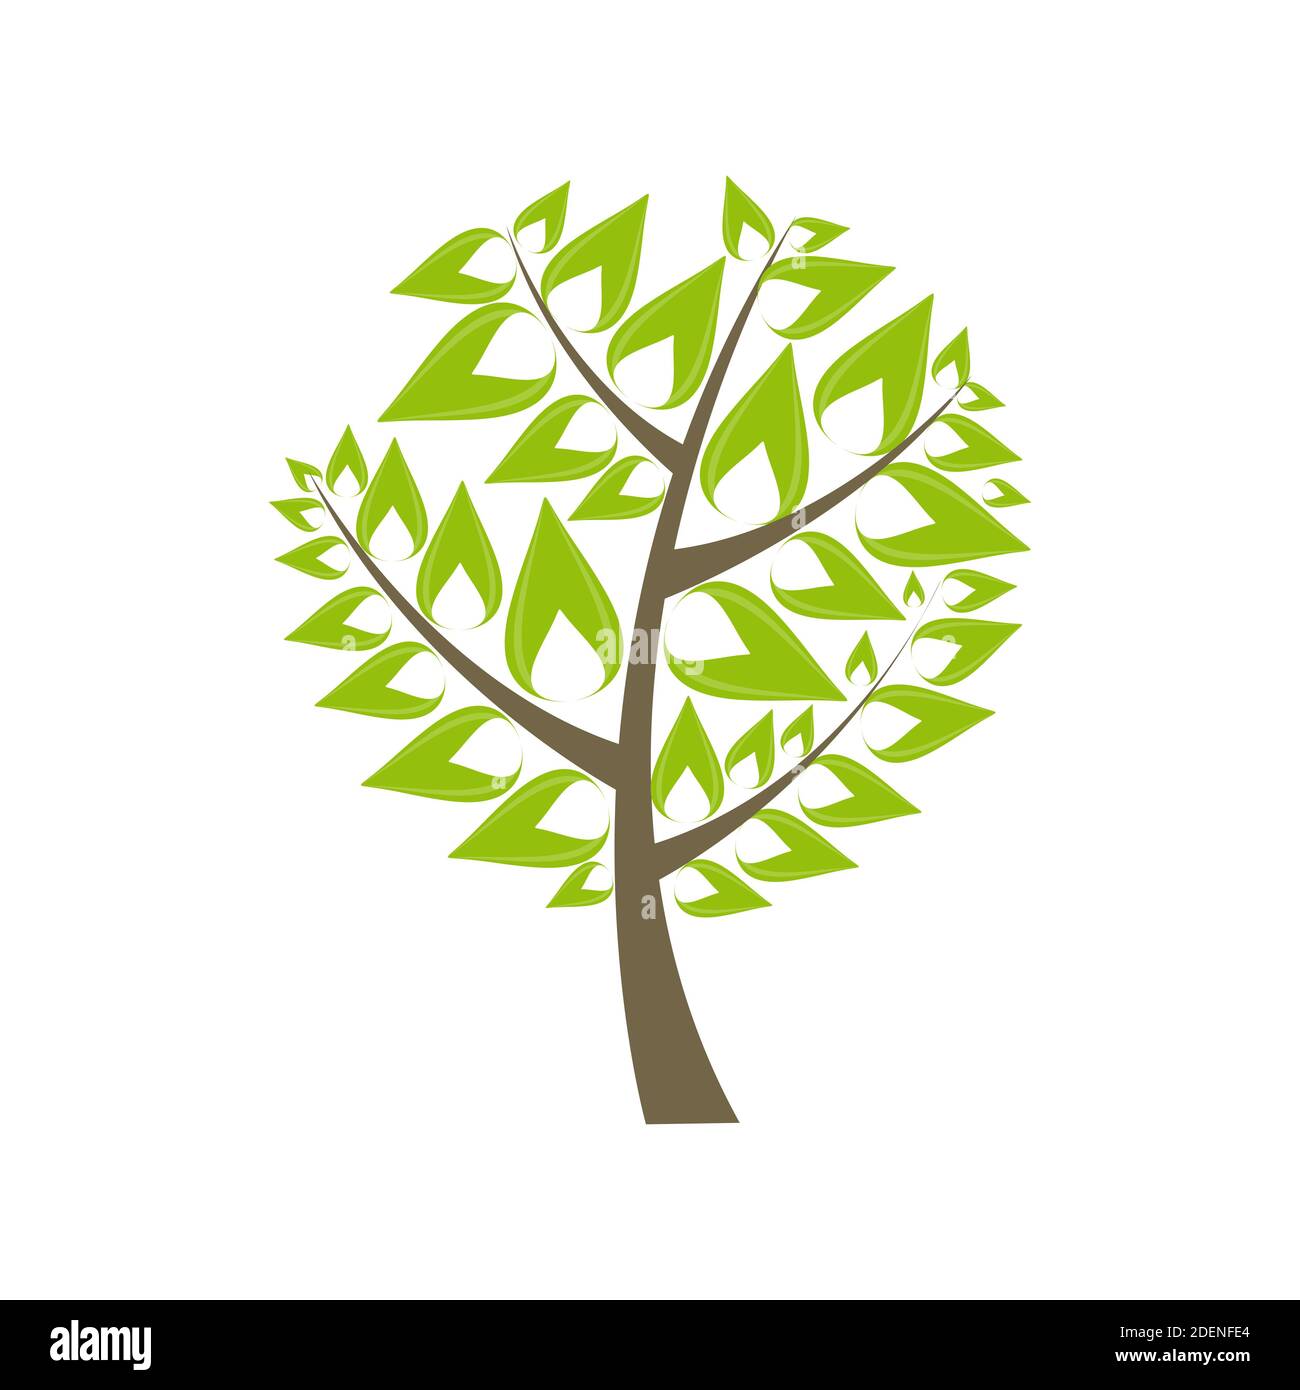 Beautiful Green Tree Icon on a White Background Illustration. Stock Photo